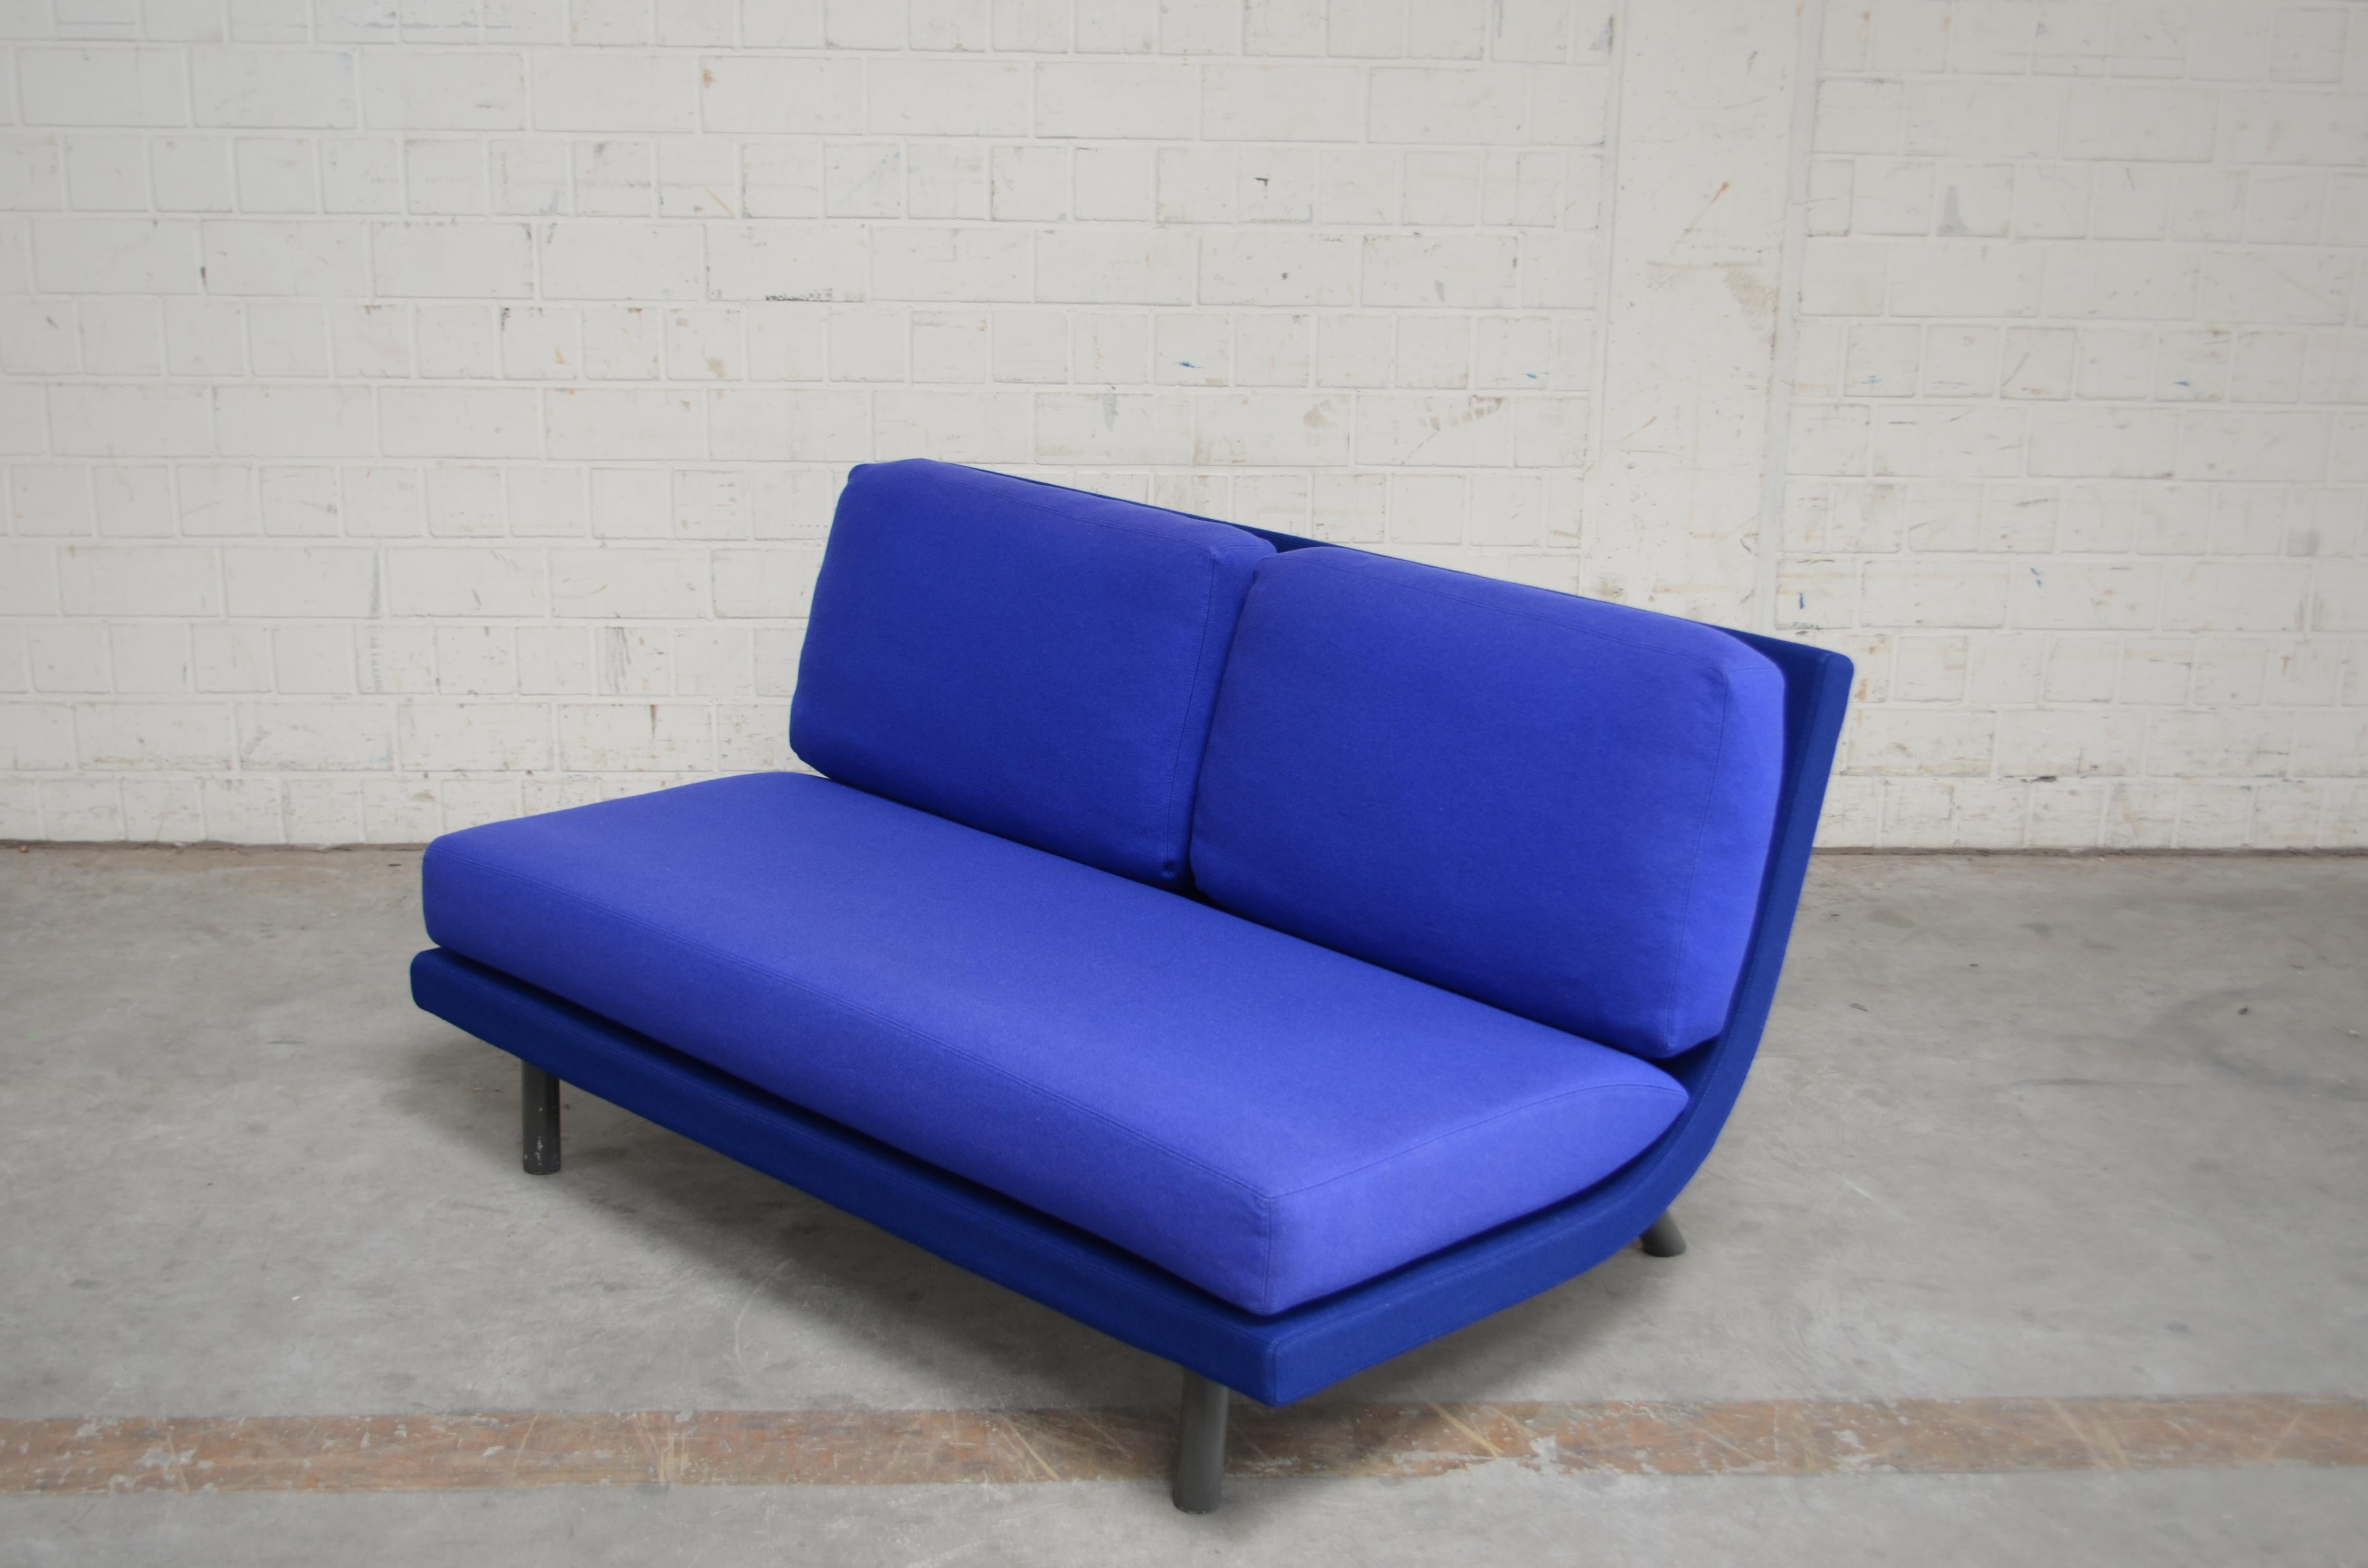 German Rare Prototype Sofa Design by David Chipperfield for Interlübke